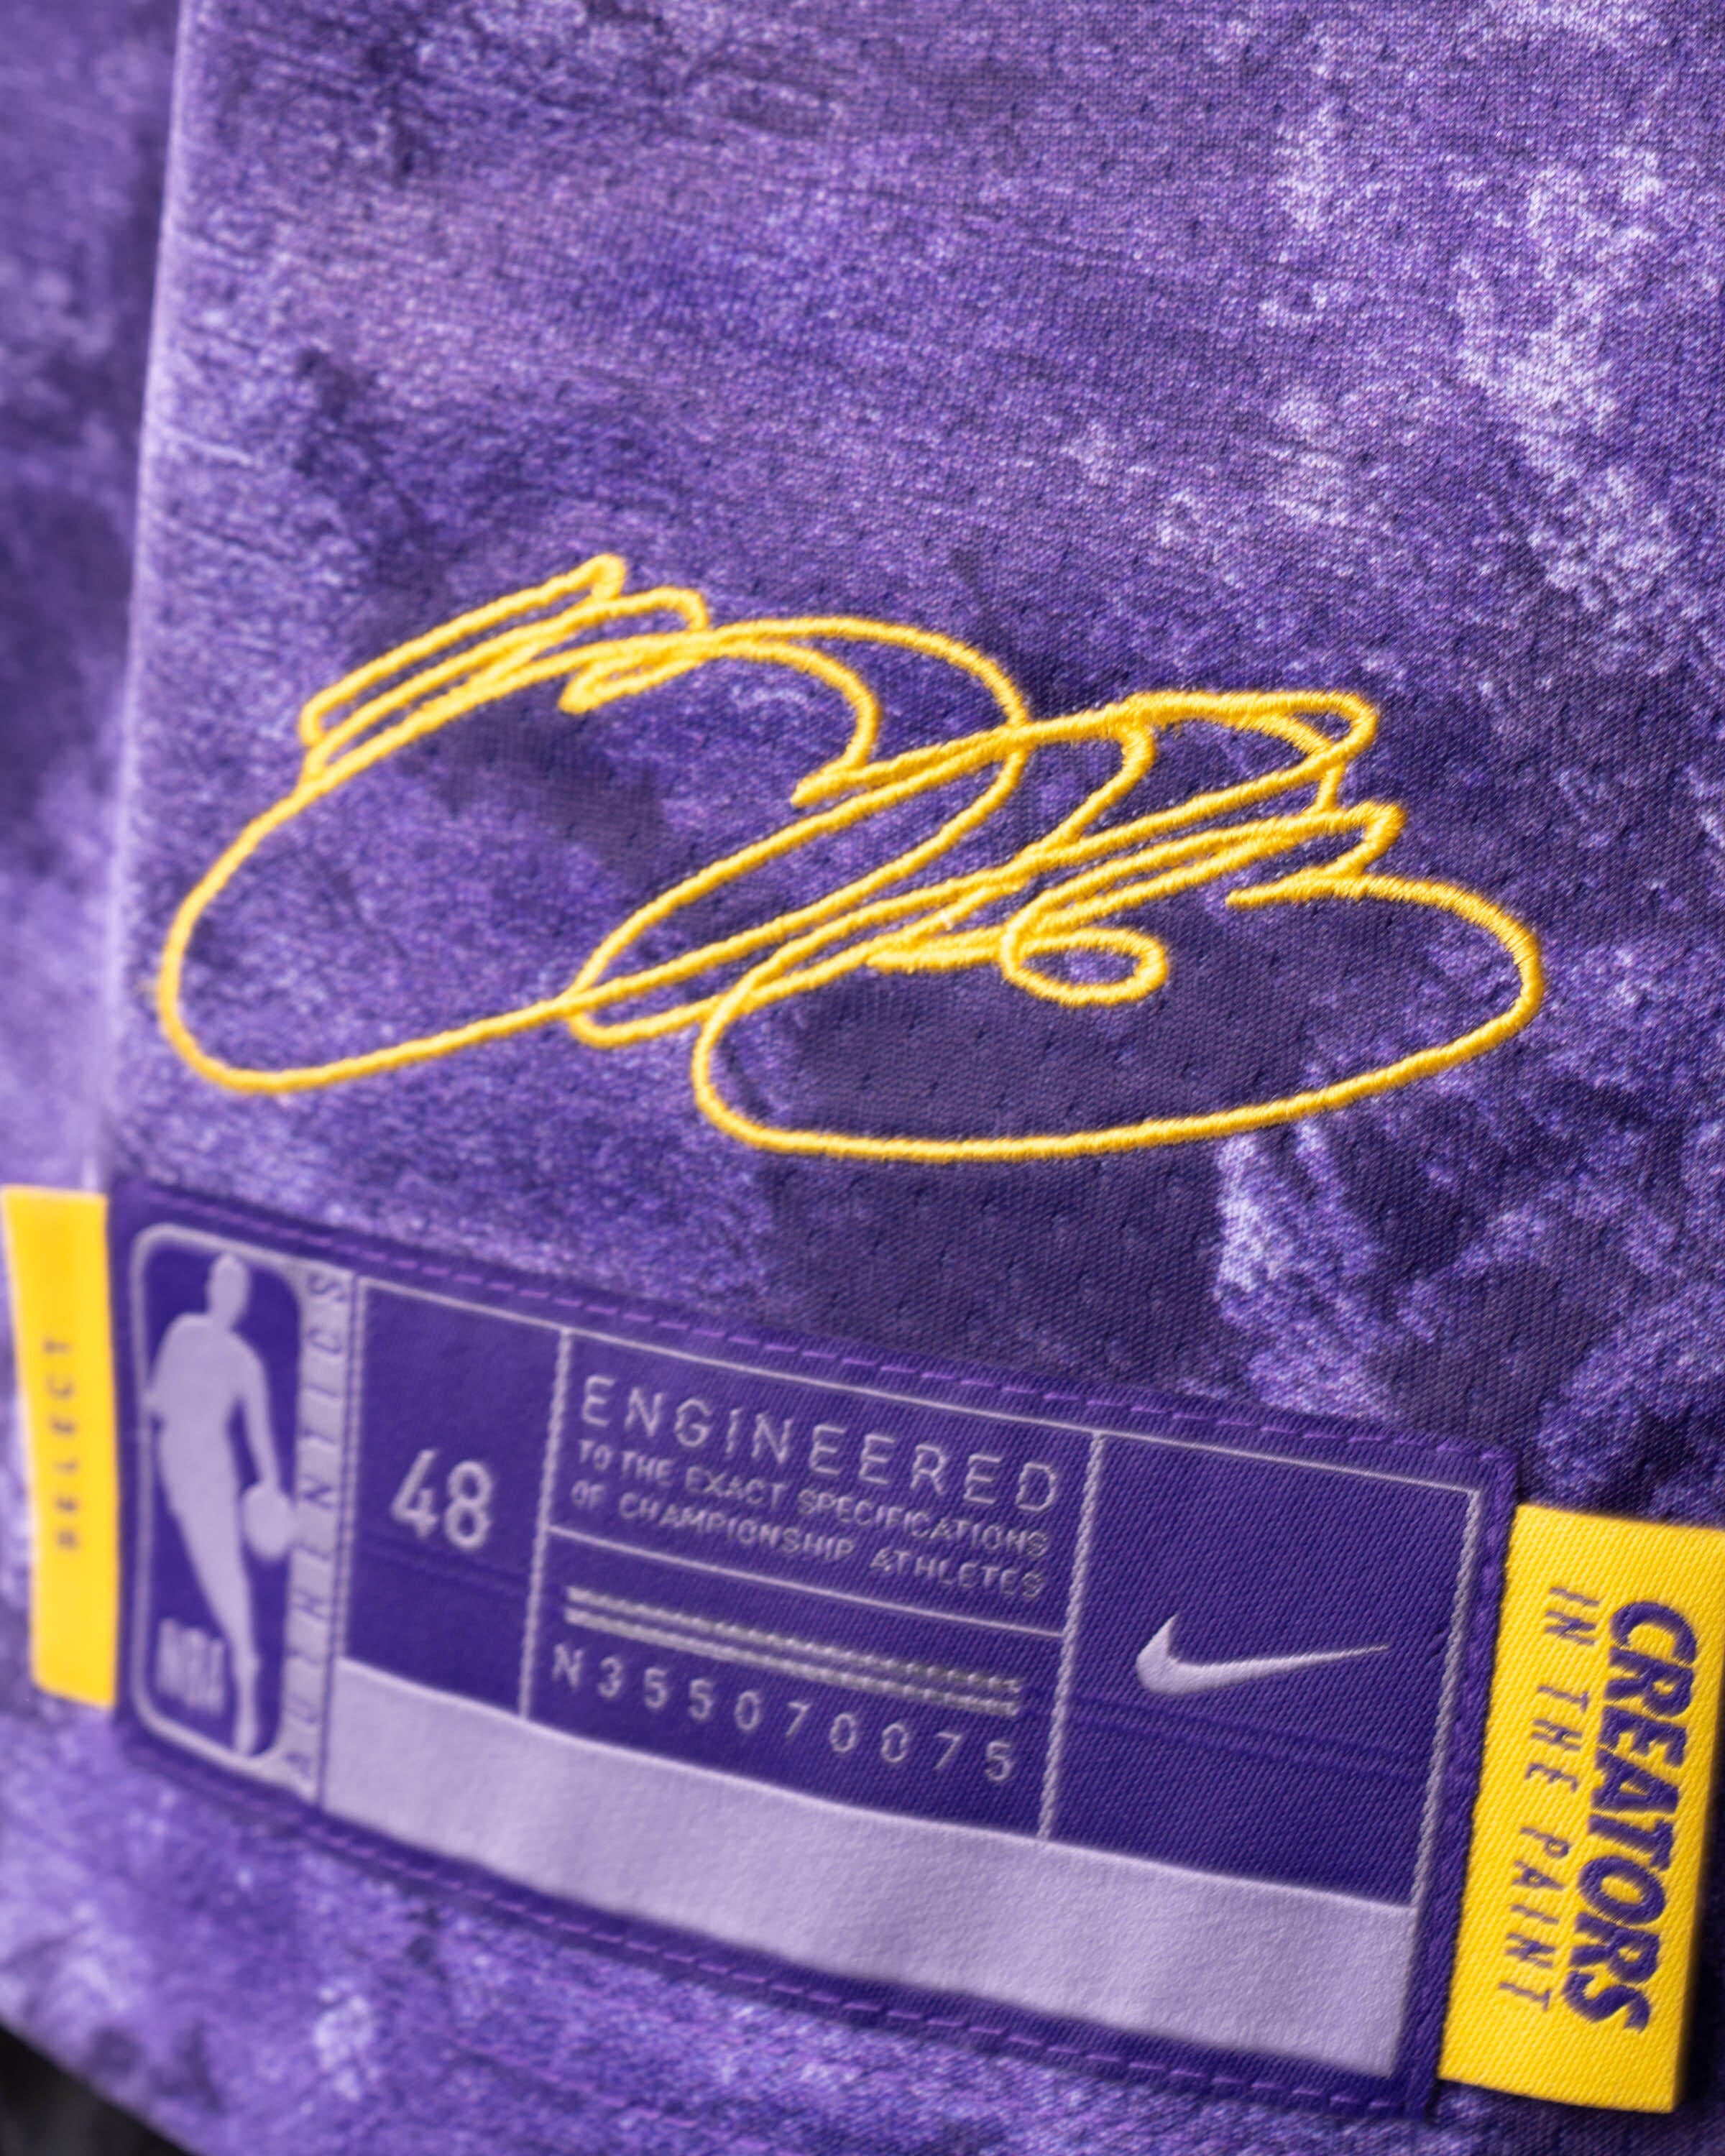 Nike La Lakers LeBron James Jersey Purple